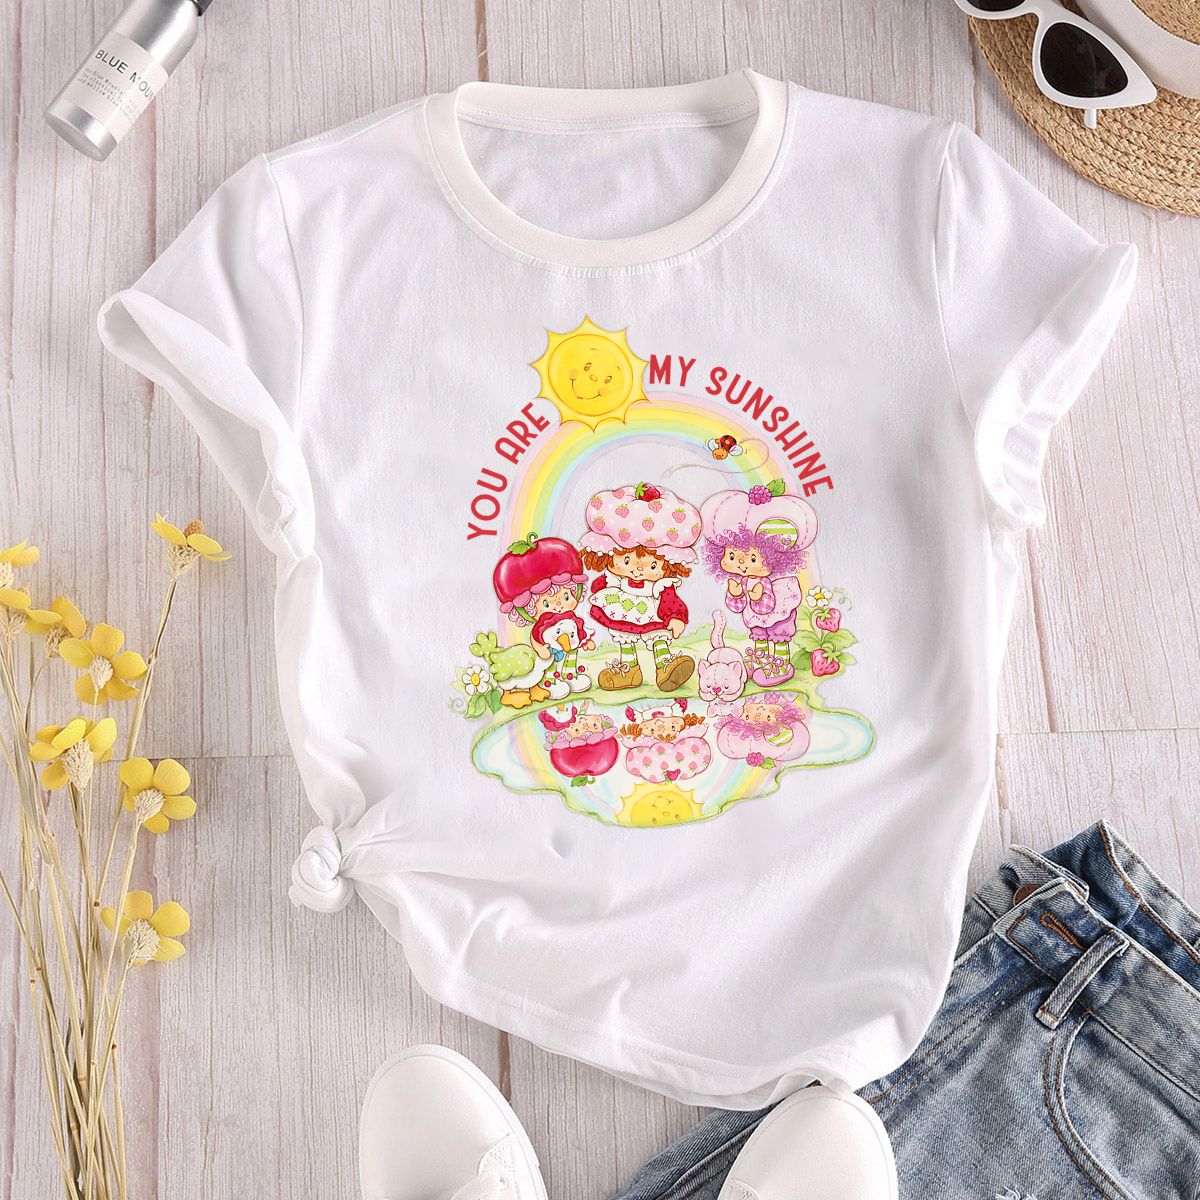 Strawberry Shortcake Shirt, Cartoon Friends Nostalgia Shirt, 80s Cartoon Friends Shirt, Care Bears And Strawberry TeeLemon Meringue, Apricot